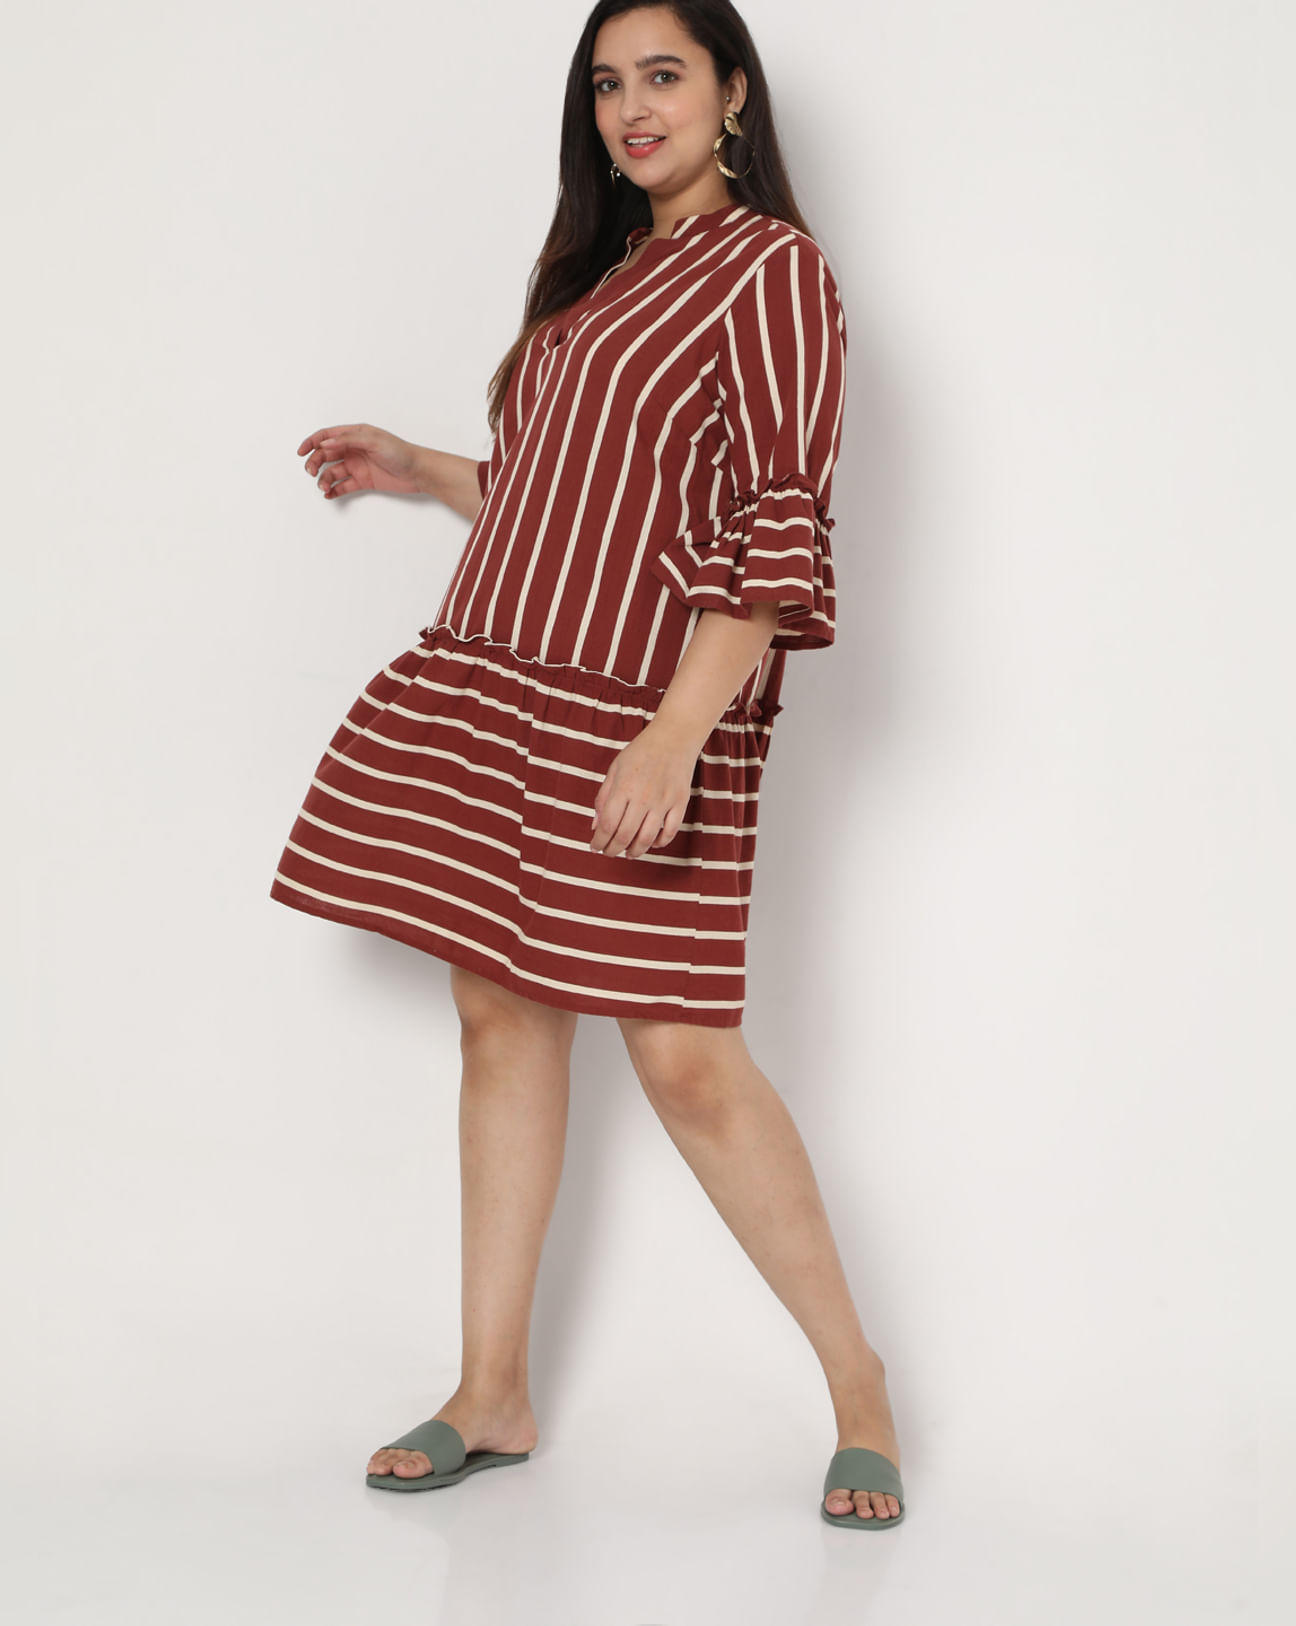 Striped Dress - Buy Striped Dress online in India